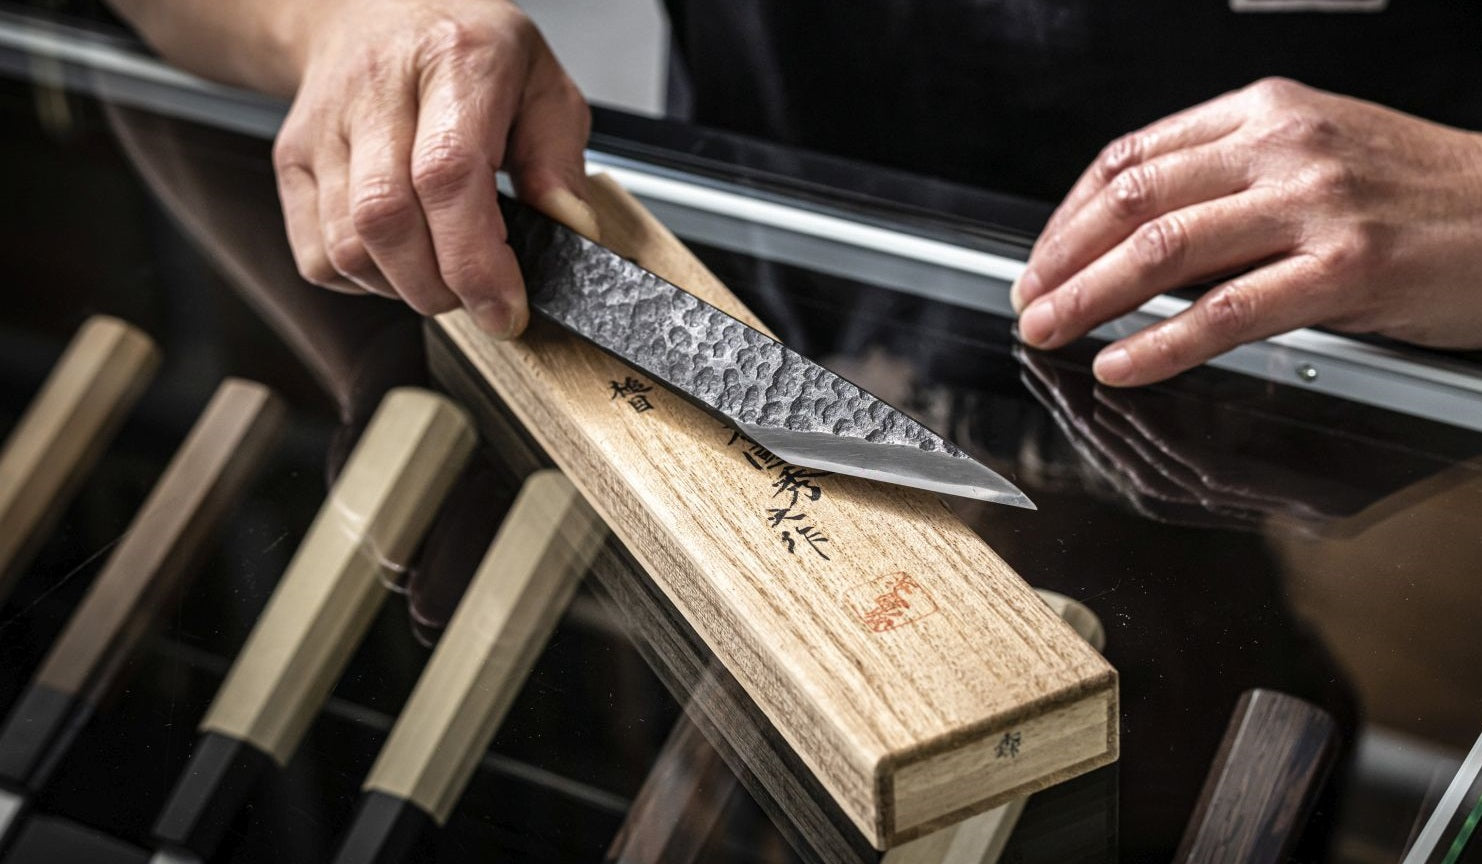 Japanese Kiridashi wood carving knife 15mm Right Bevel